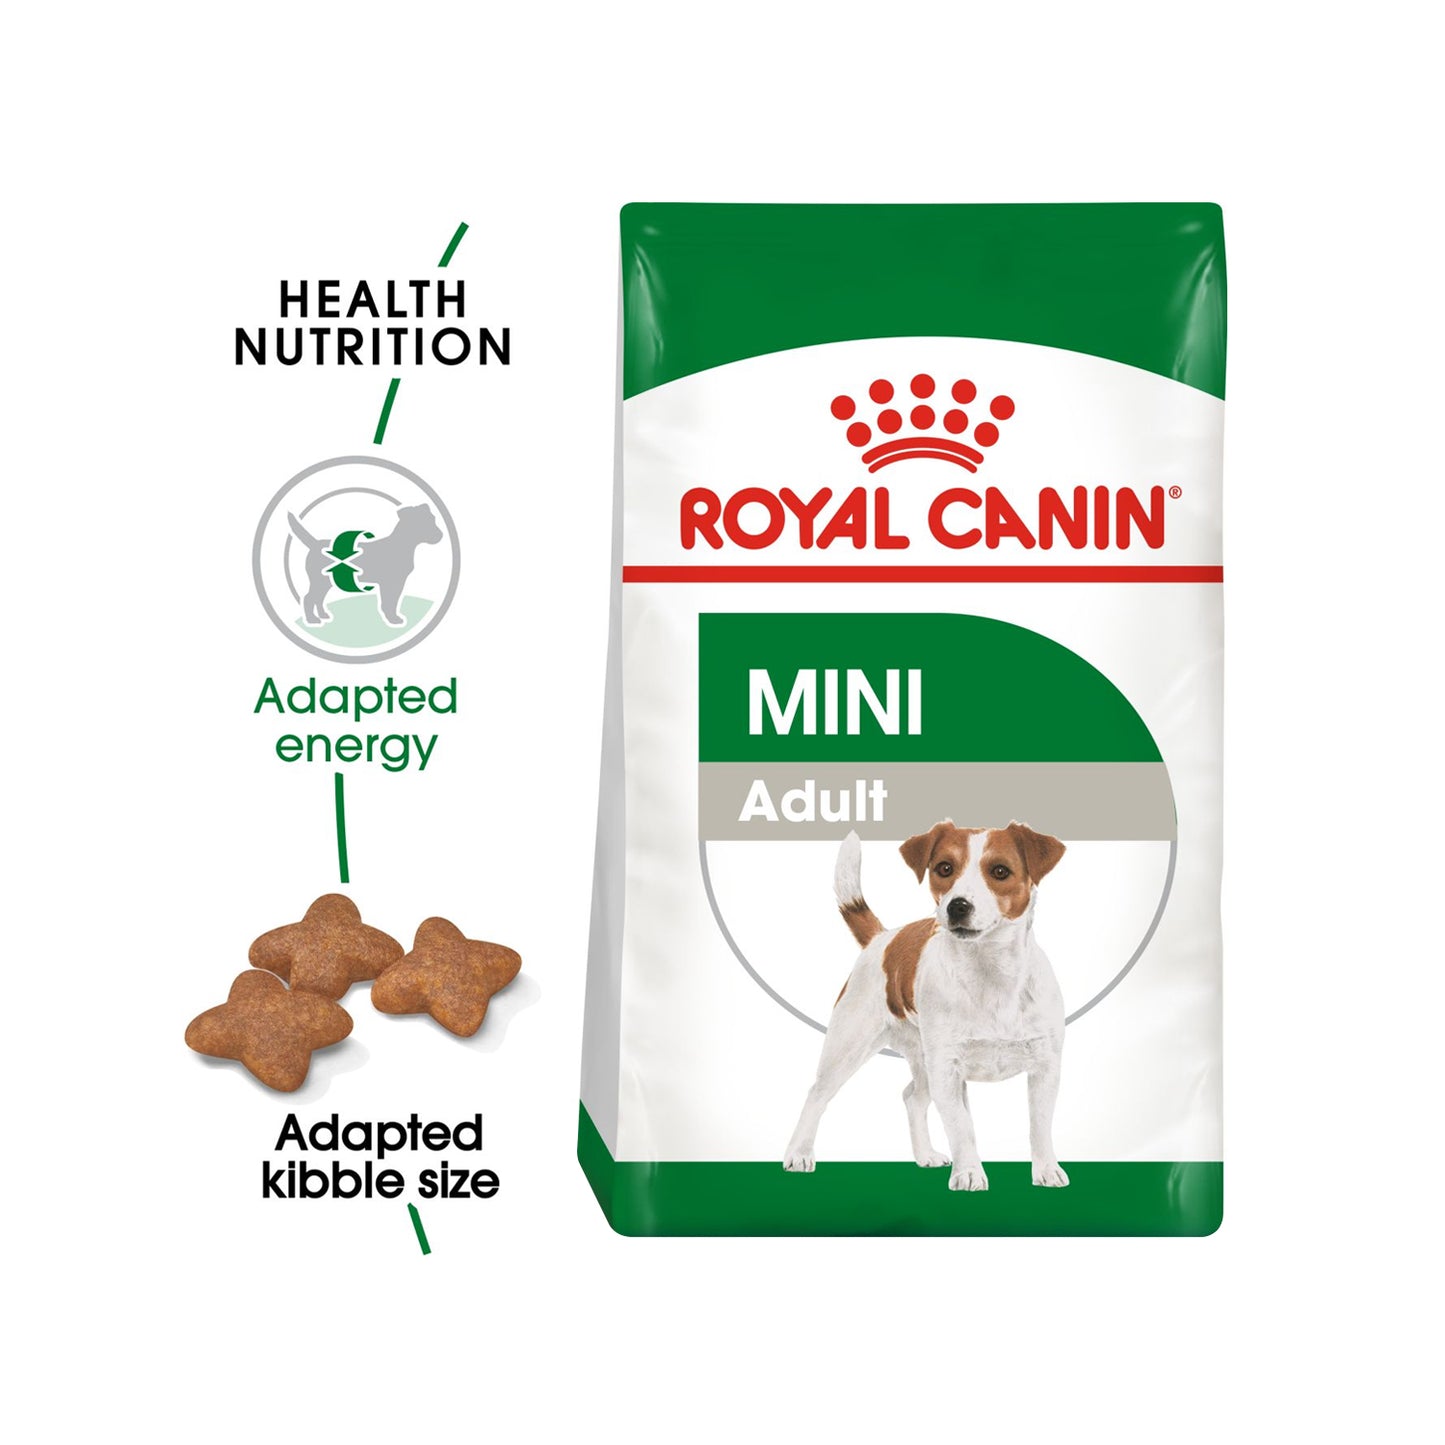 Royal Canin - Mini Adult Dry Dog Food